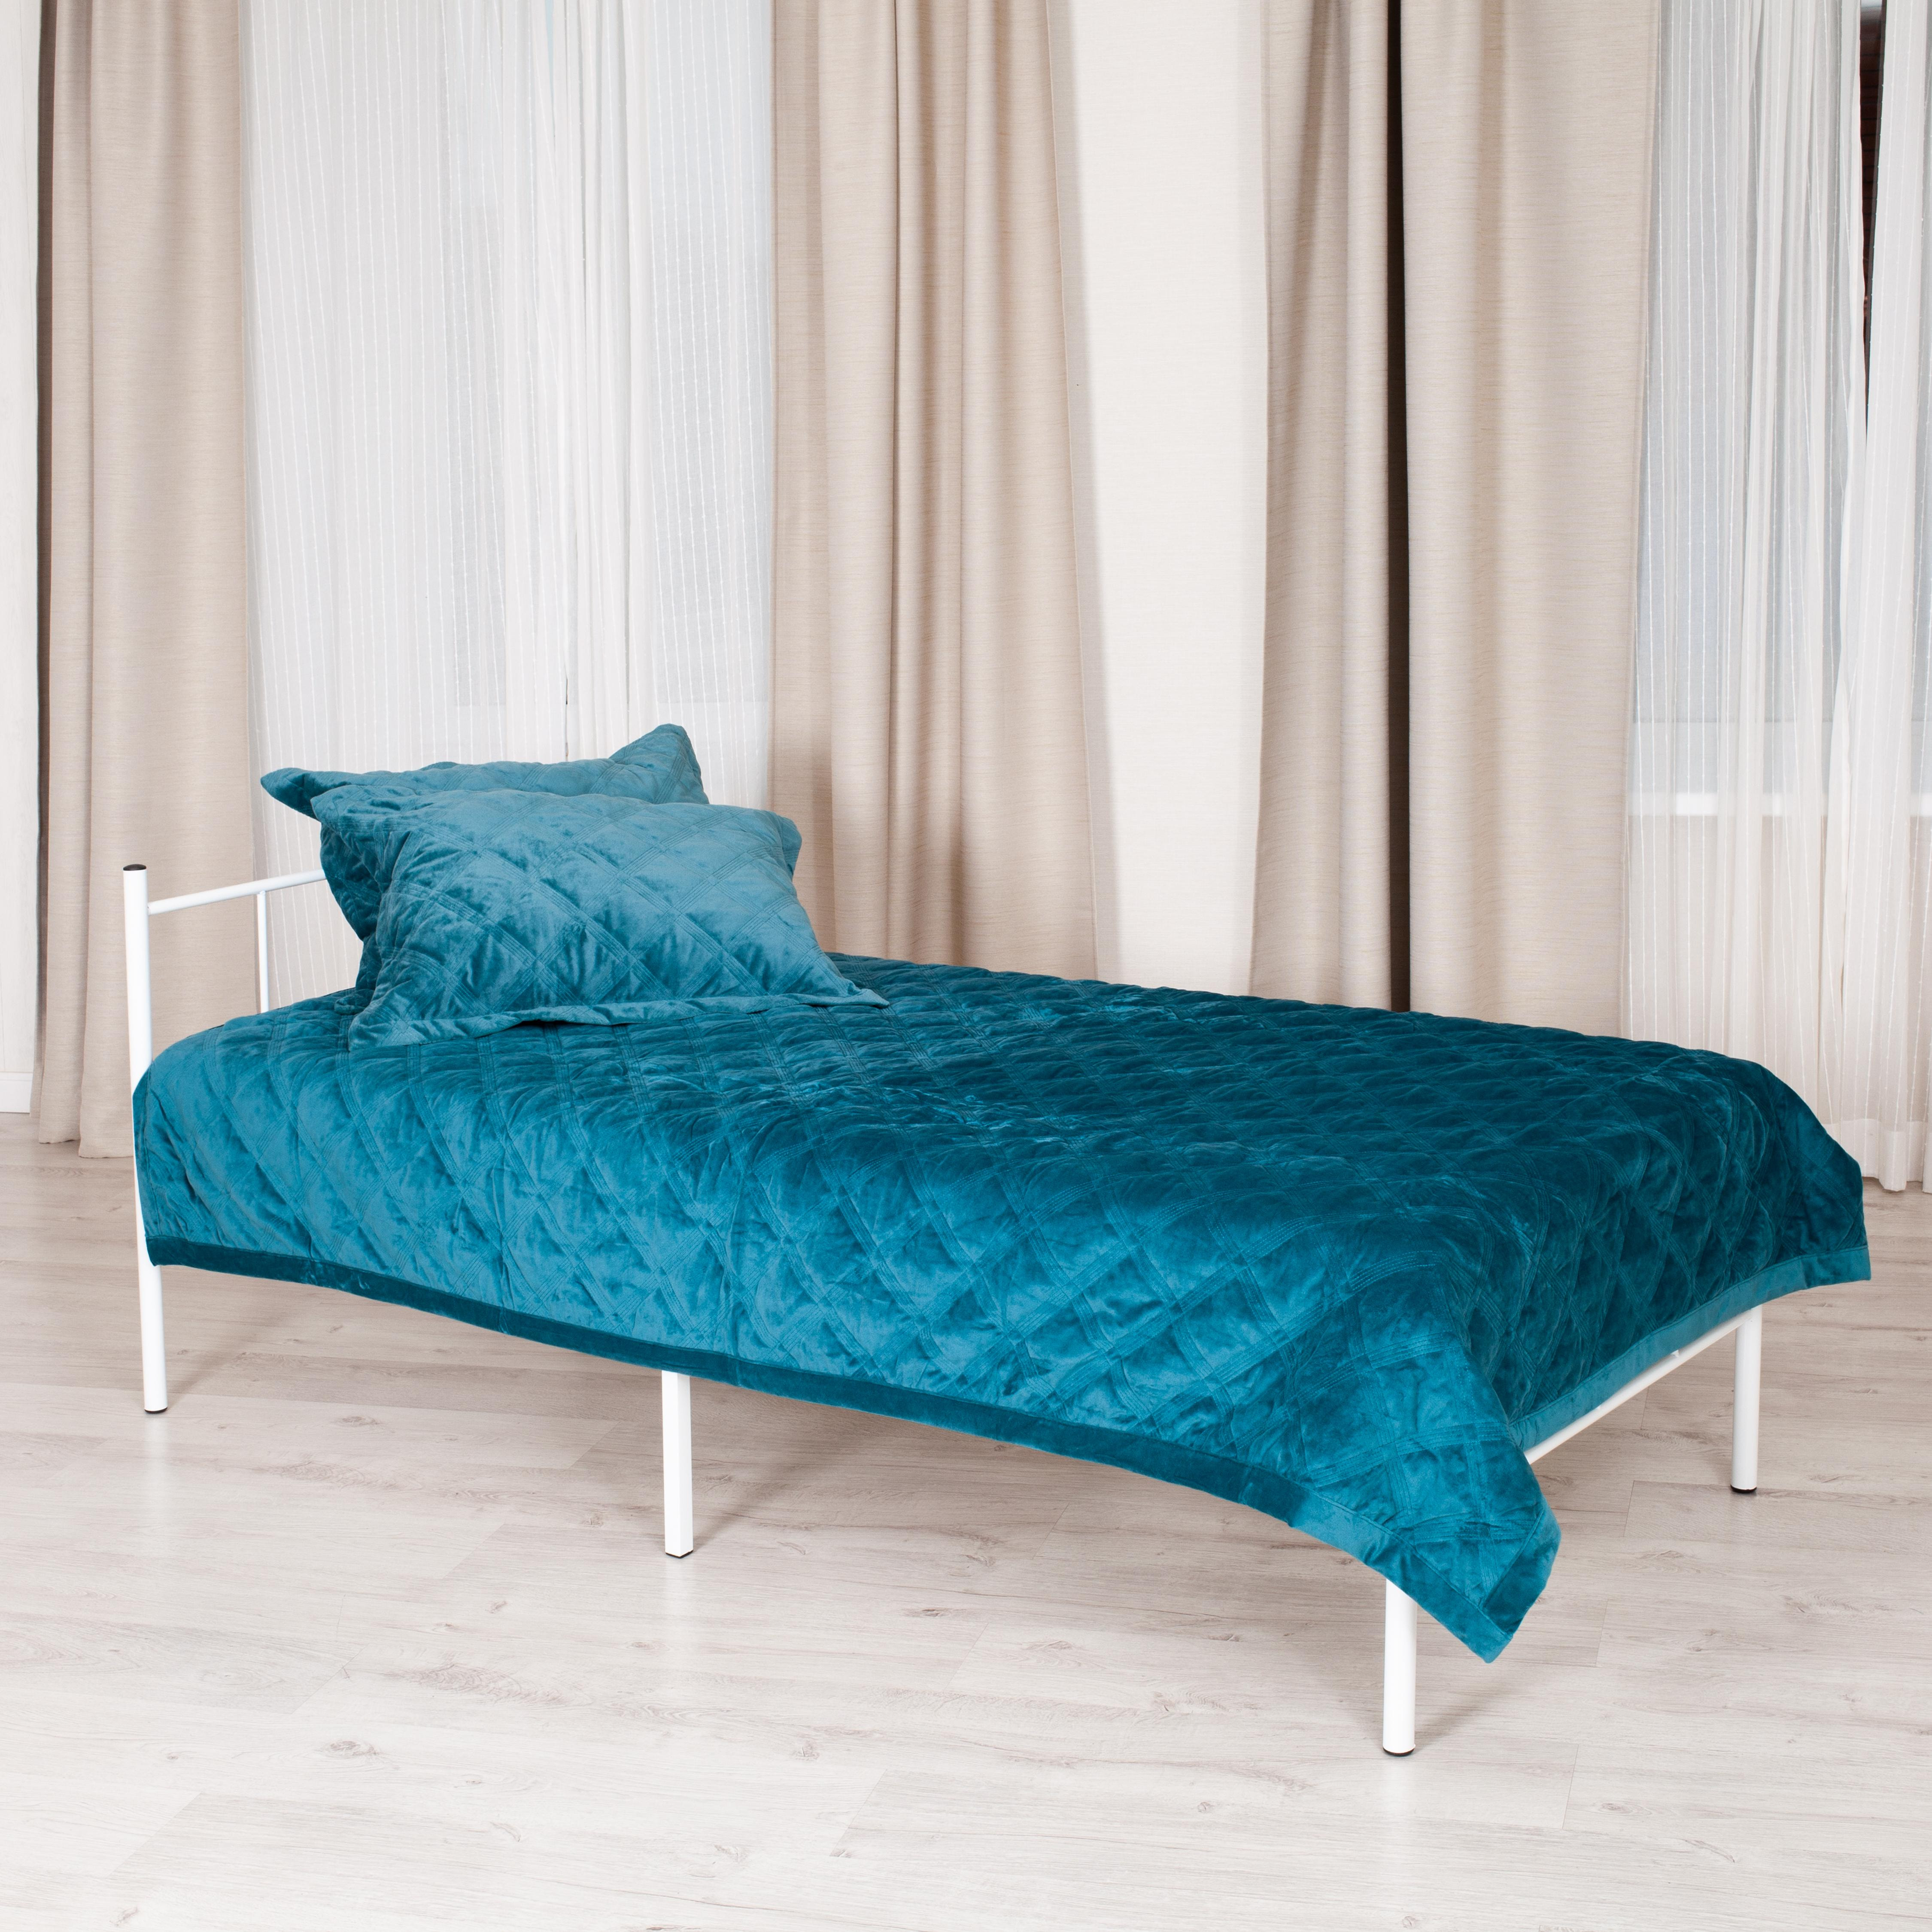 Кровать ROWENTA (mod. 9177) металл, 90*200 см (Single bed), White (белый)